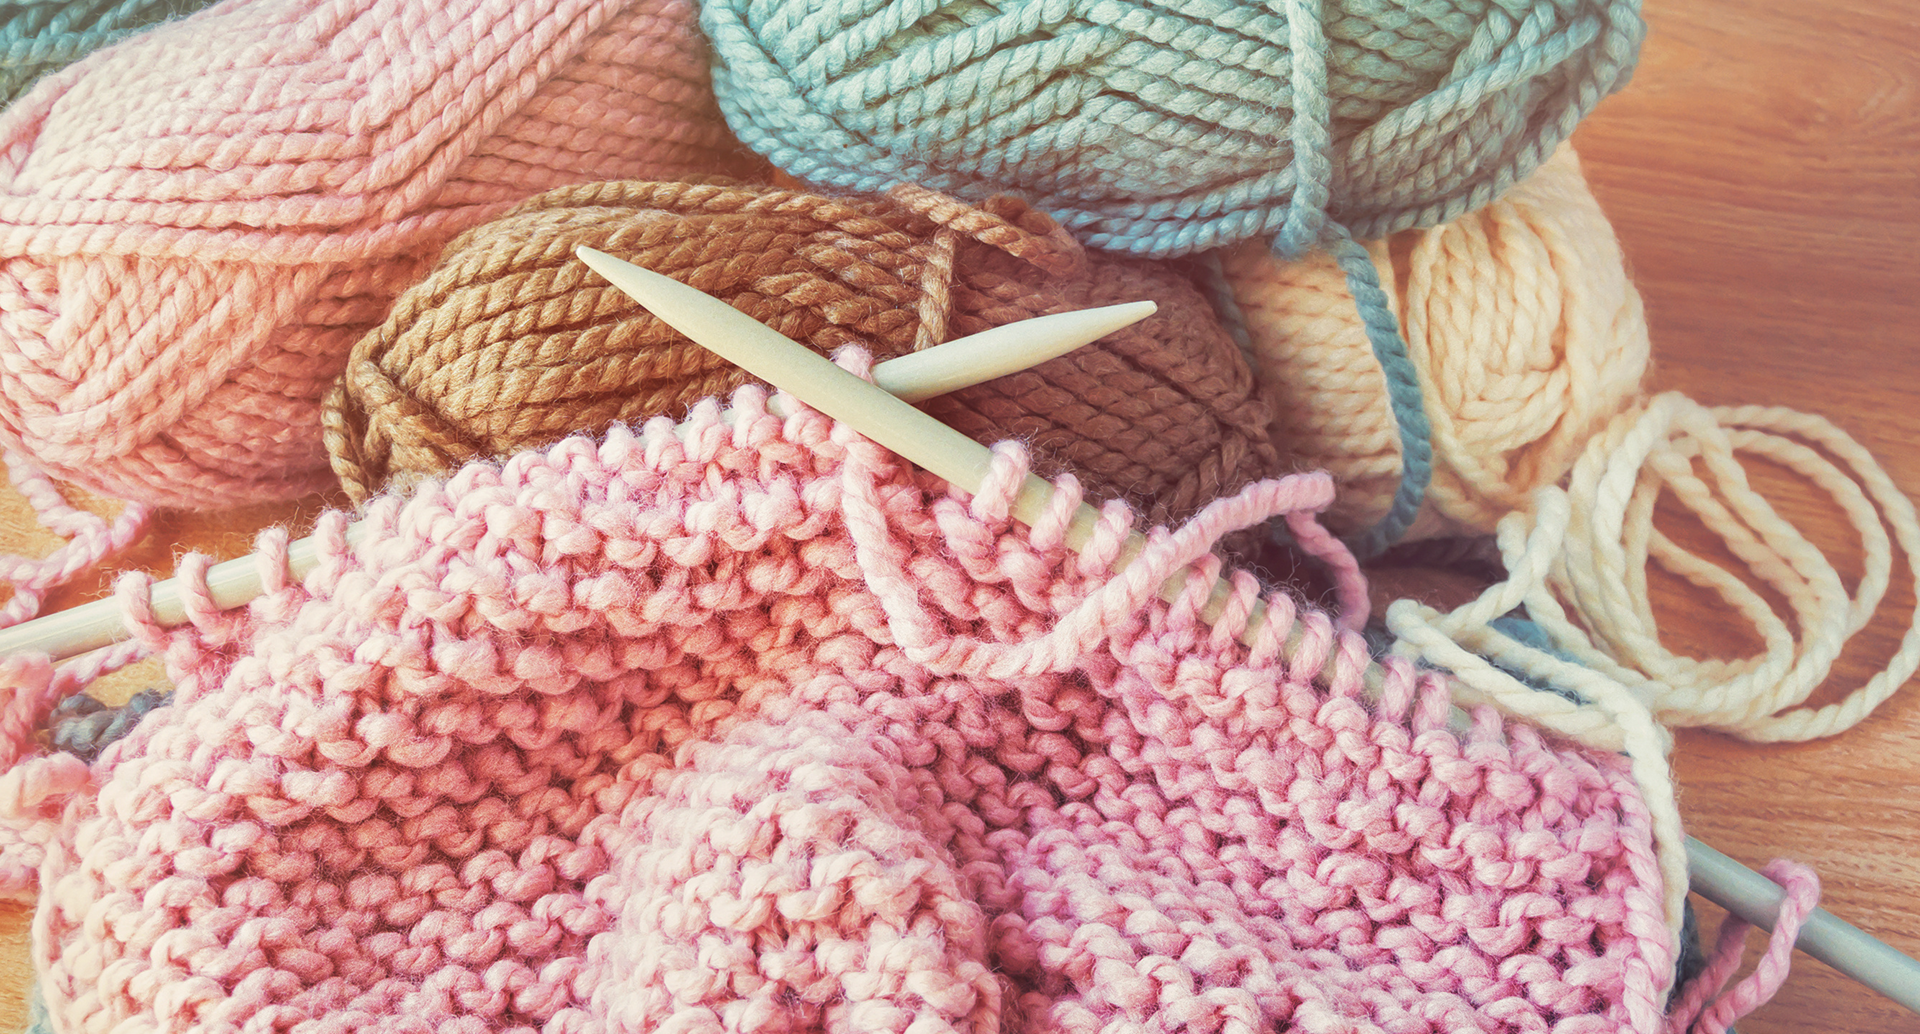 Knitting needles and balls of wool